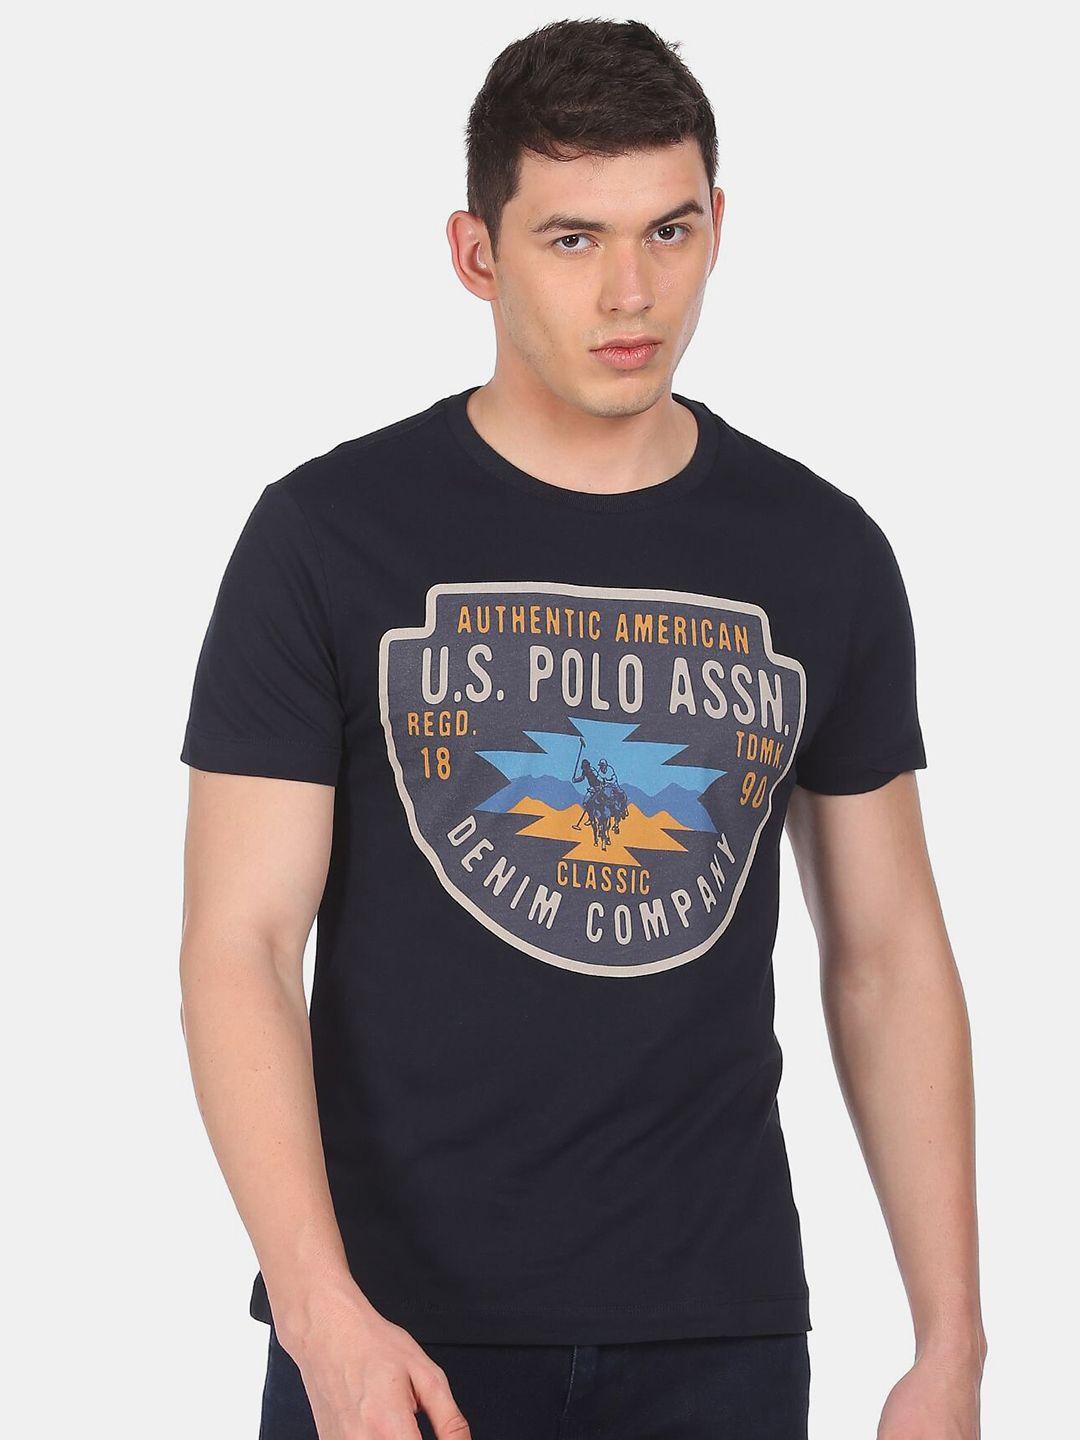 u.s. polo assn. denim co.men navy blue typography printed t-shirt plus size